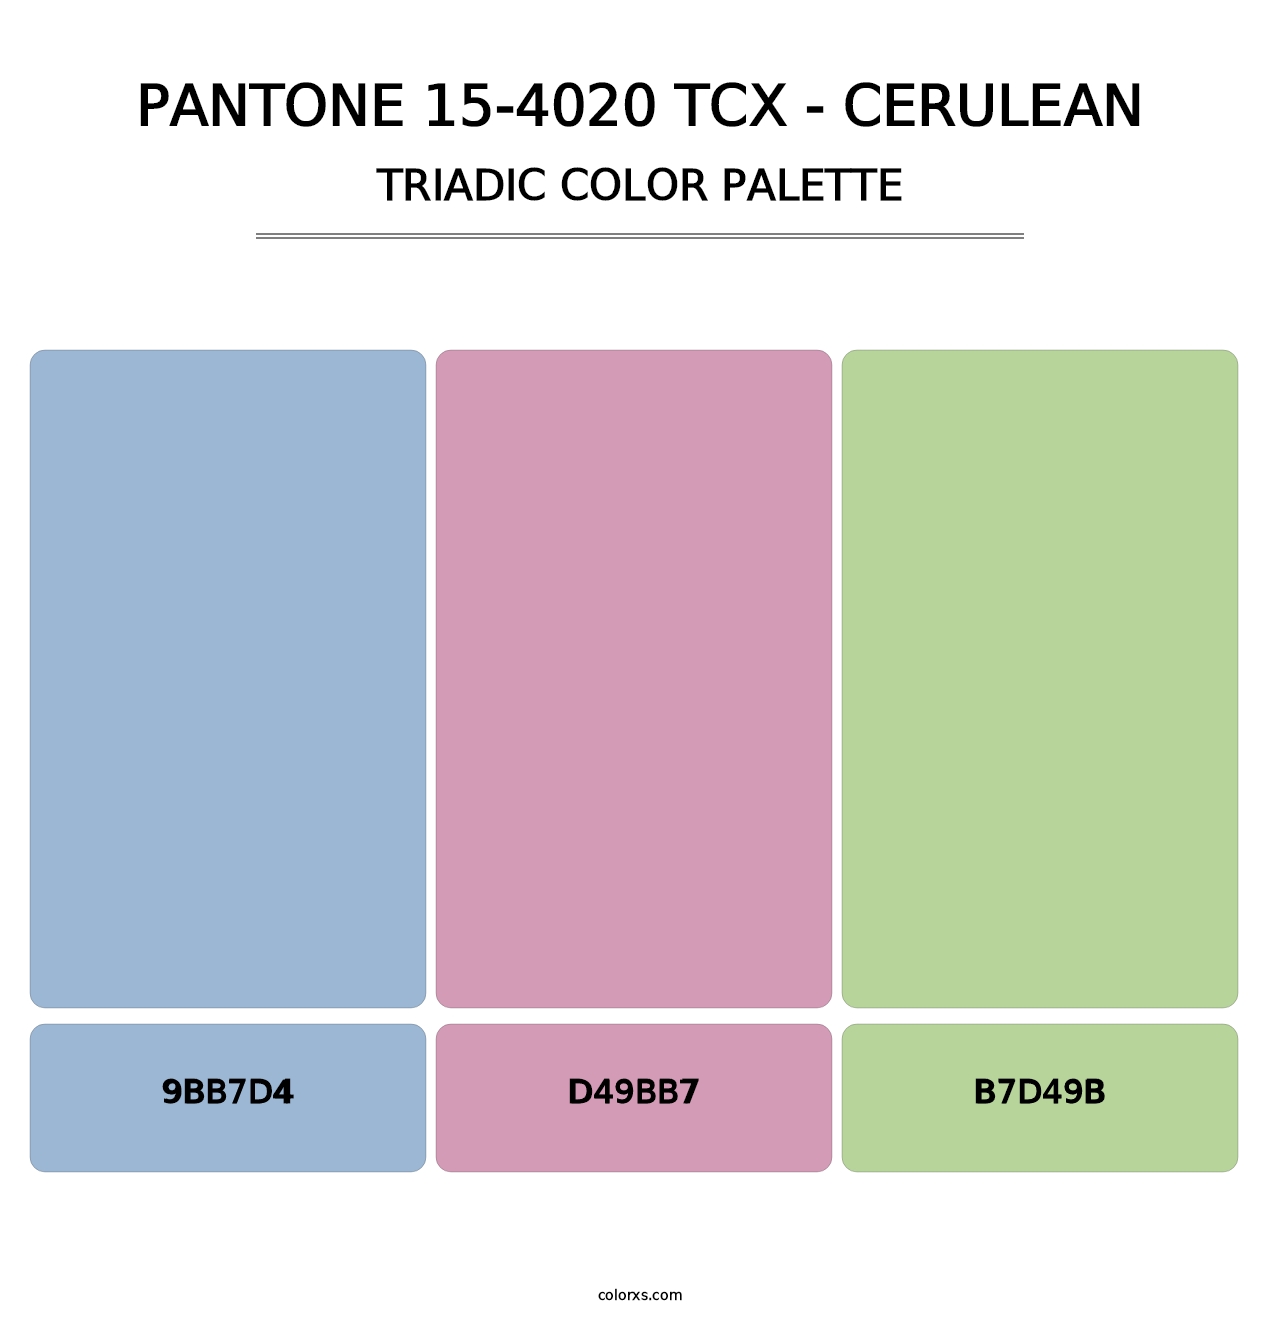 PANTONE 15-4020 TCX - Cerulean - Triadic Color Palette